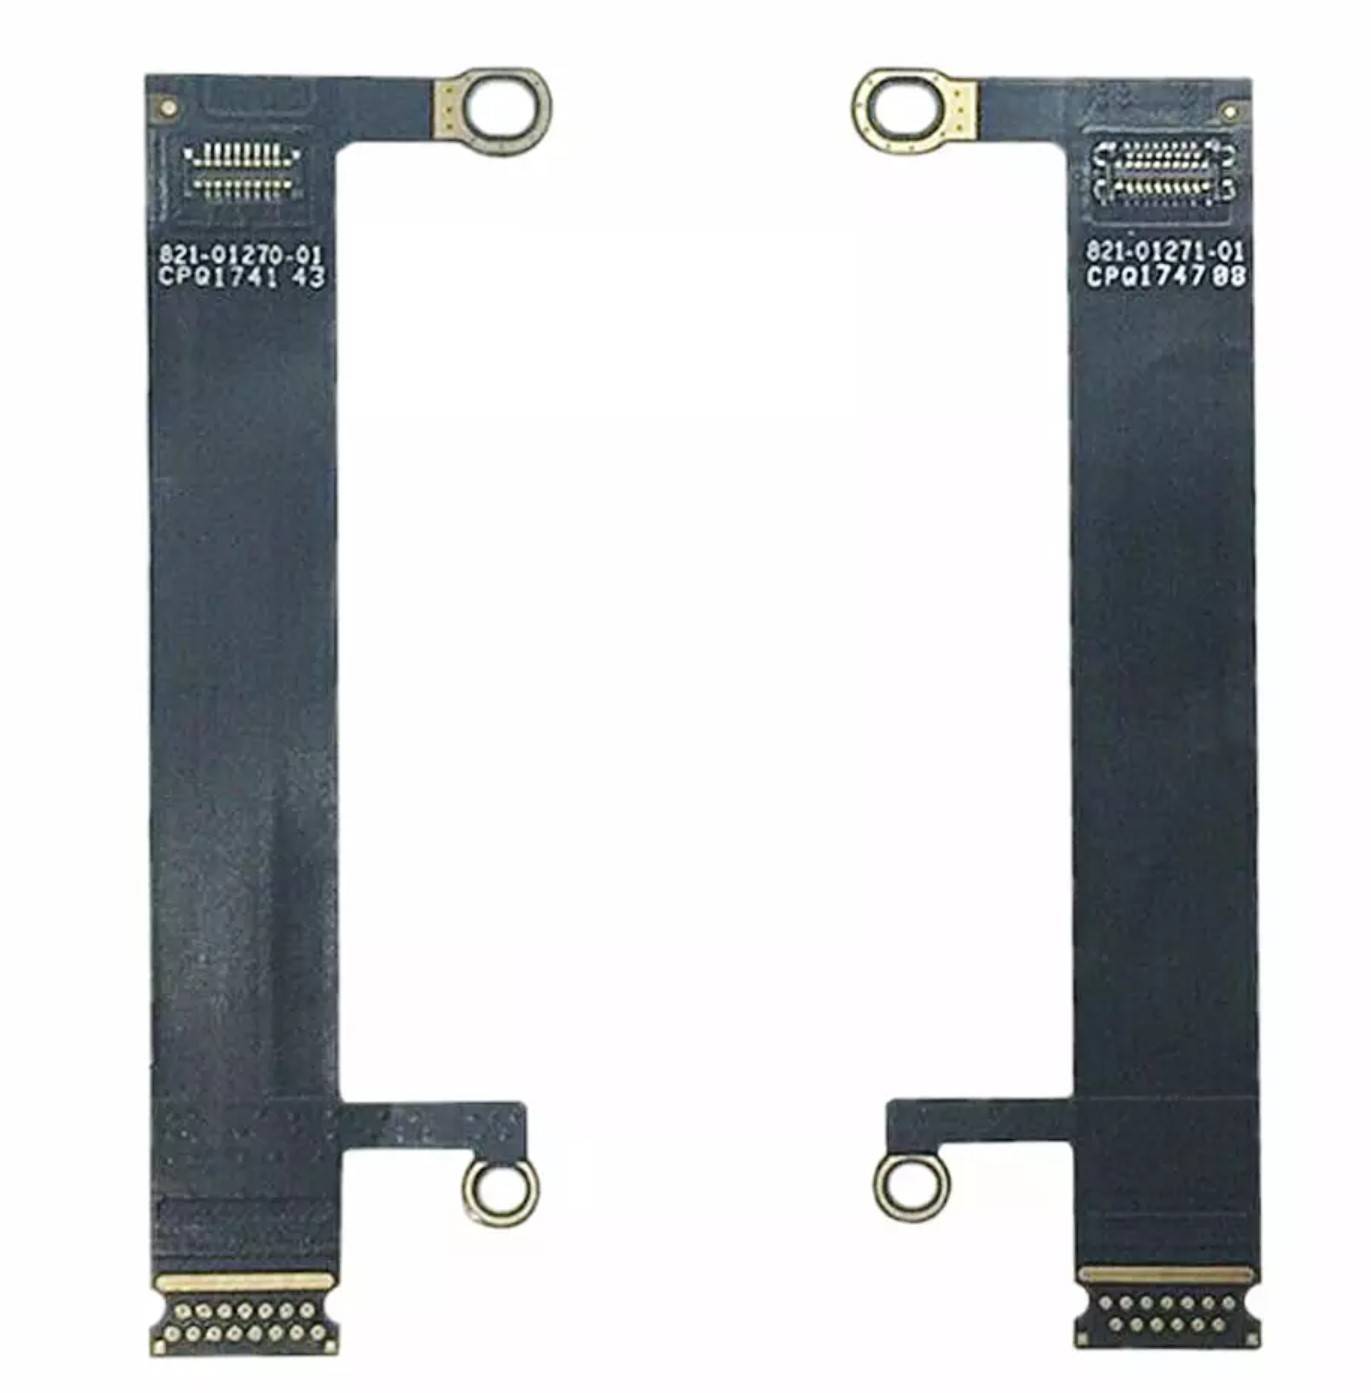 Luz-de-fondo-LCD-Flex-Cable-para-Macbook-Pro-13-15-pulg-A1707-A1706-A1708-821-01270-idkmanager2.jpg